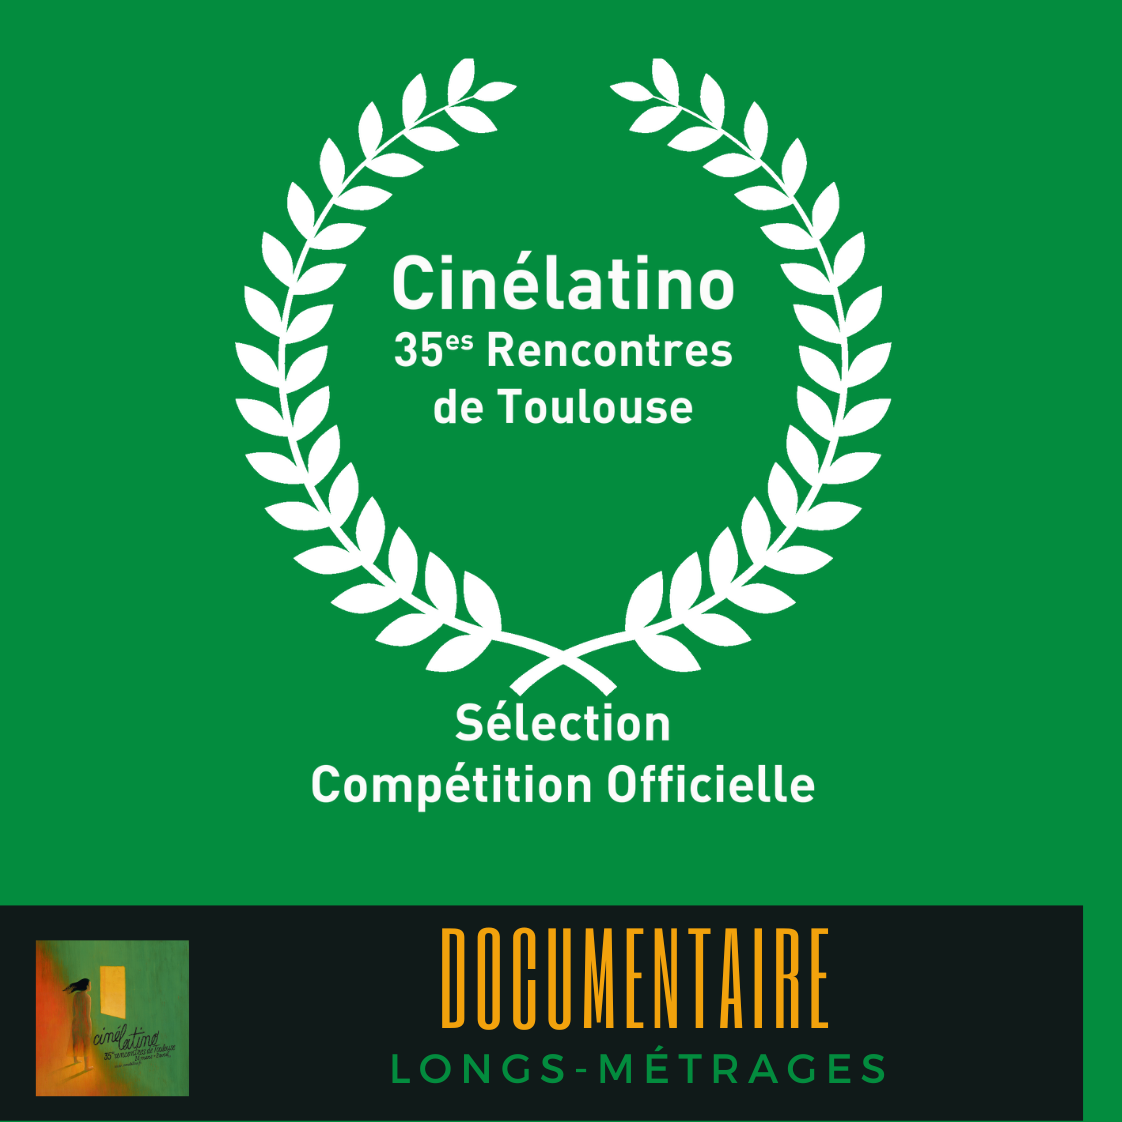 cinelatino_documentaire